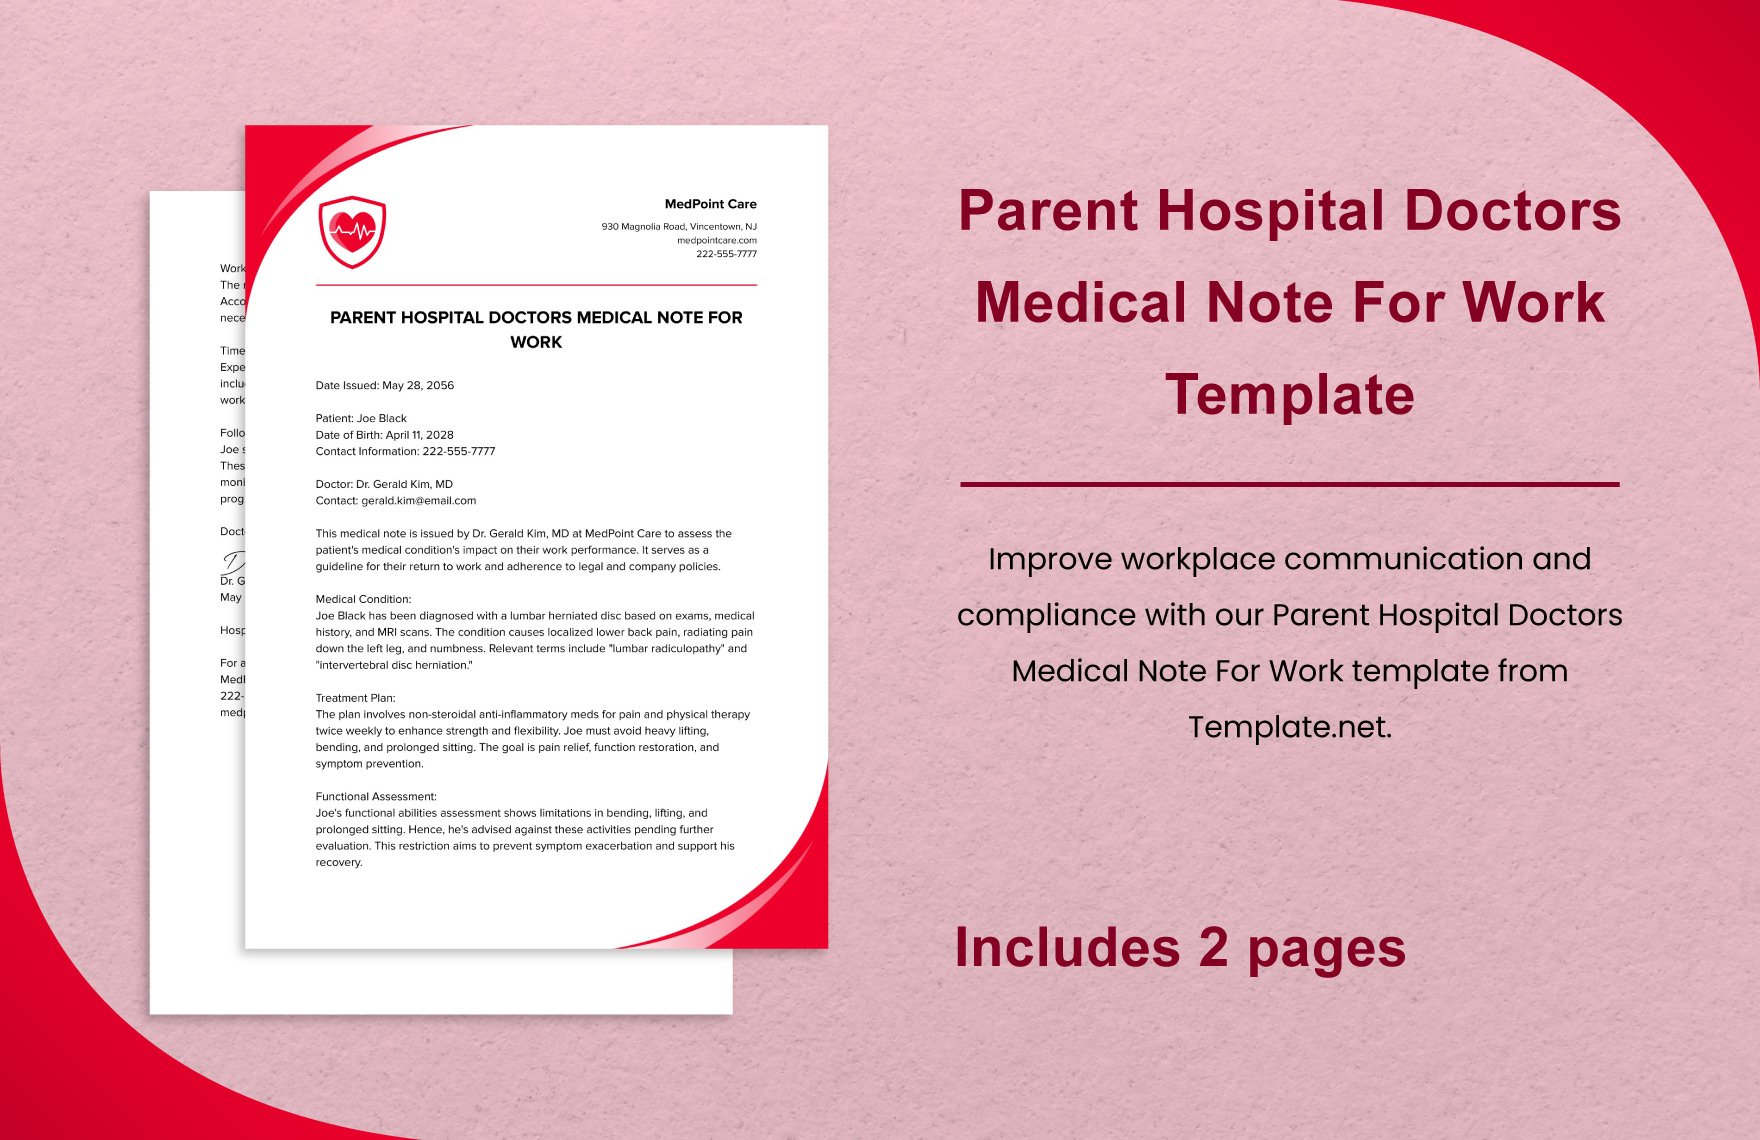 Parent Hospital Doctors Medical Note For Work Template